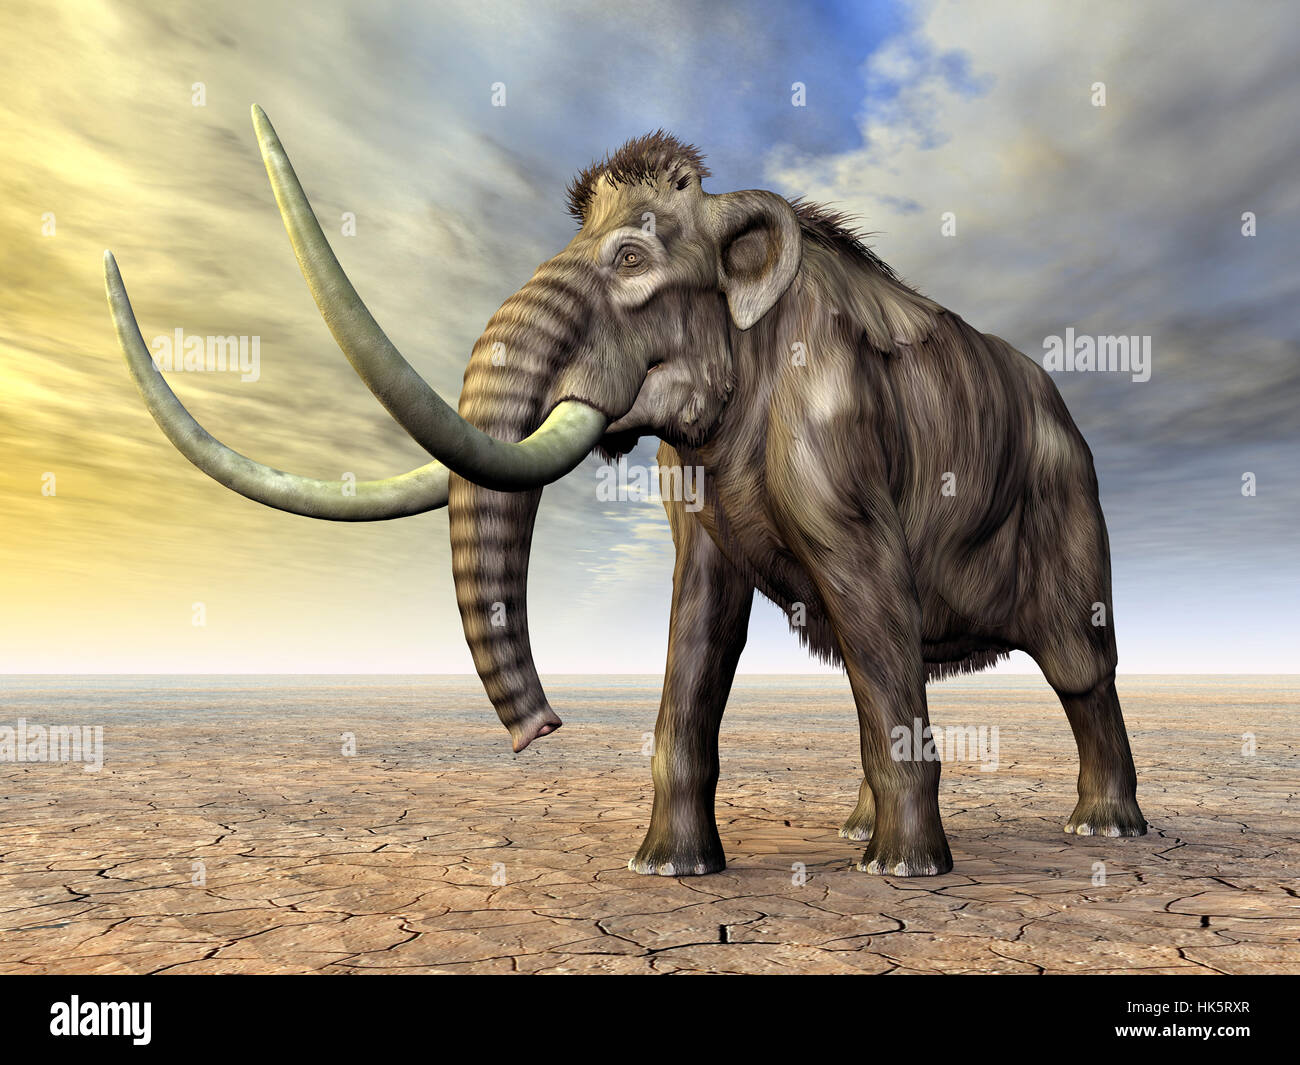 Elephant, avorio, brosmio, mammut, paleontologia, grande, grande, enorme, extreme, Foto Stock